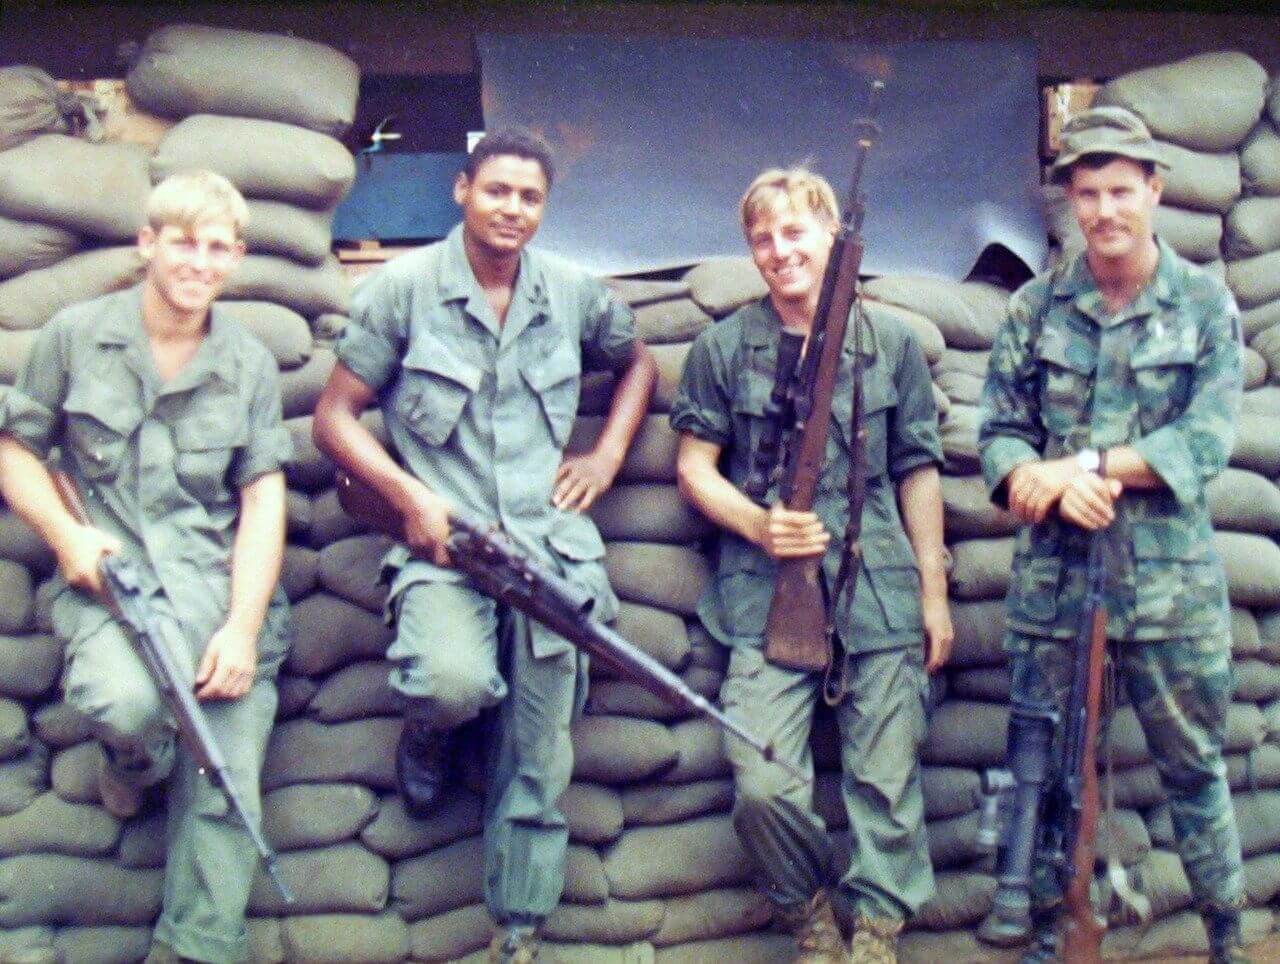 U.S. soldiers in Vietnam with XM21 rifles